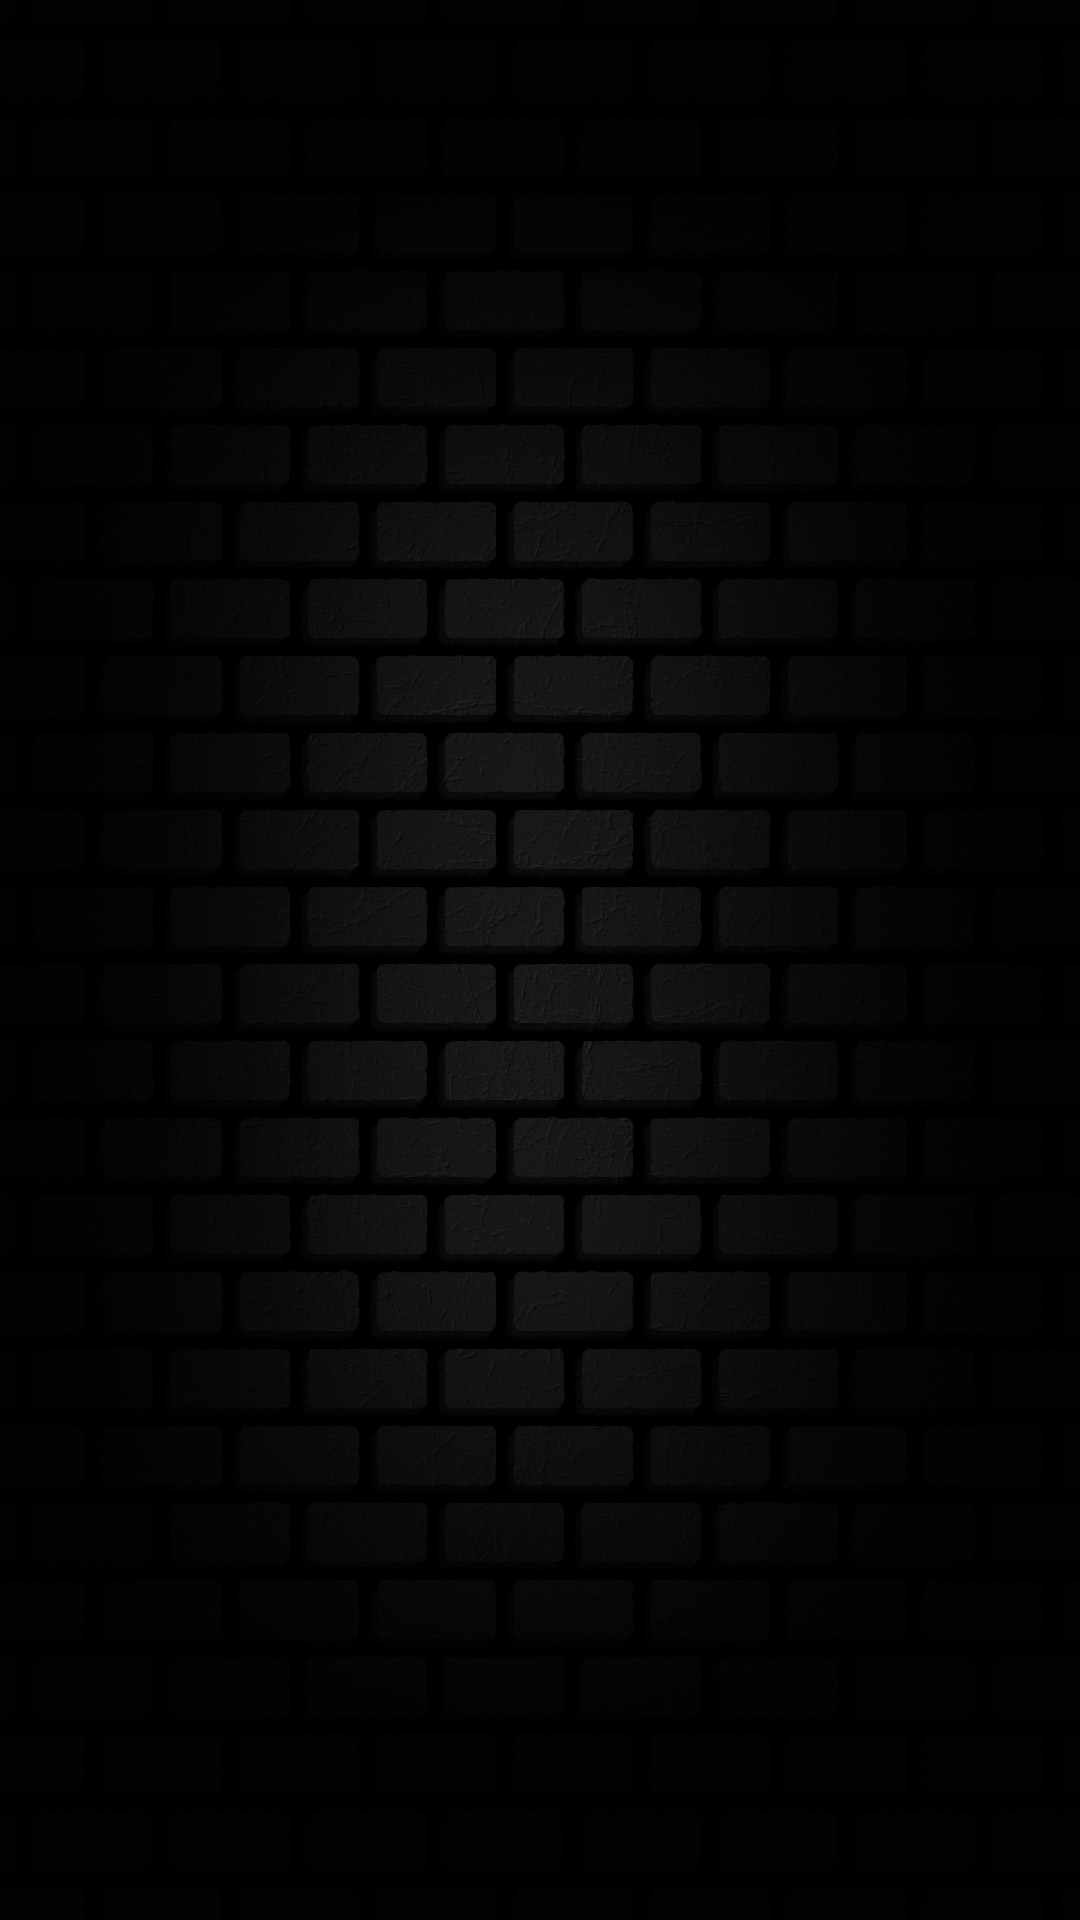 black mobile phone background